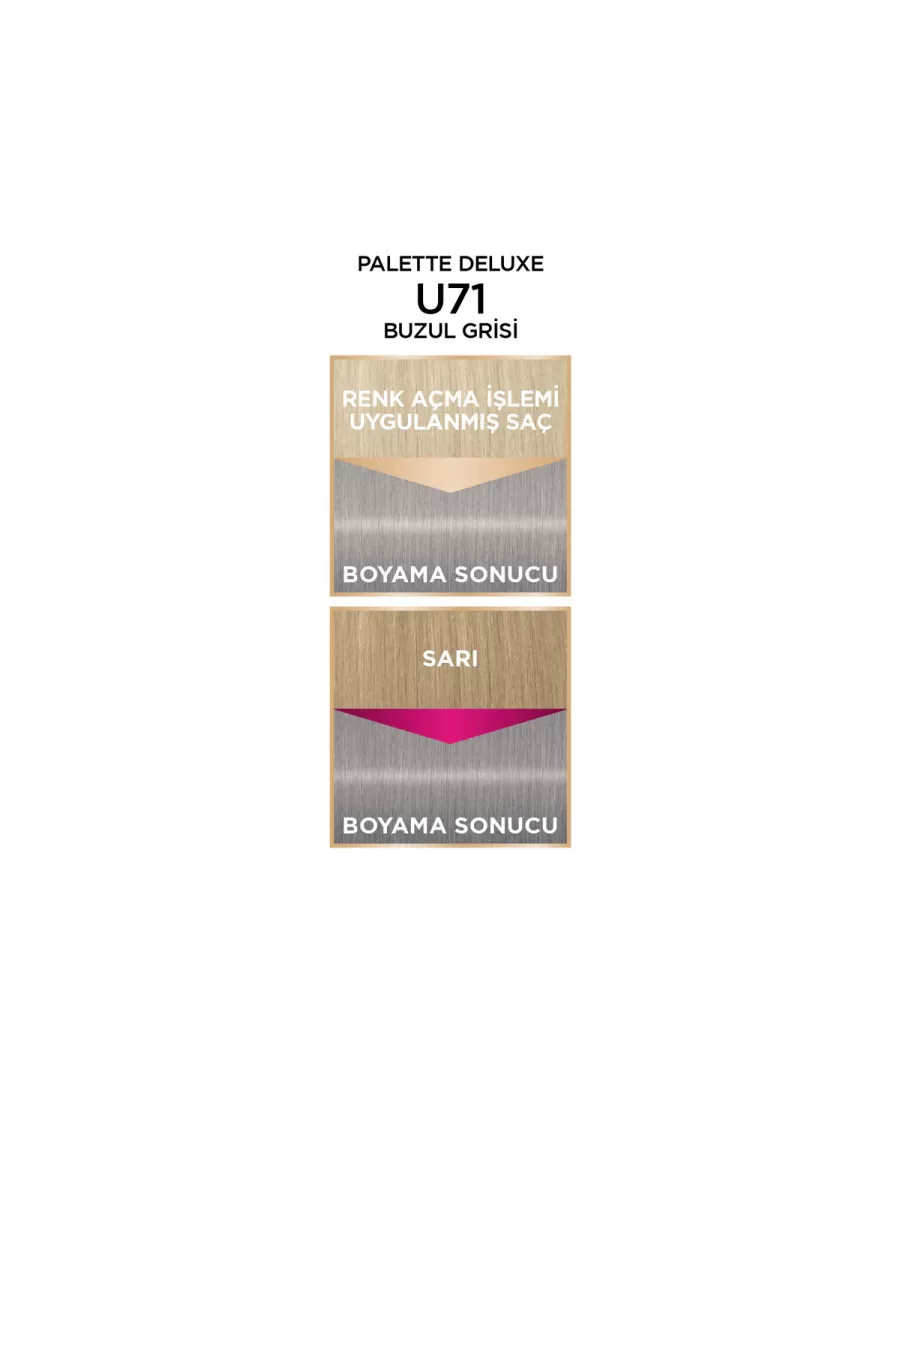 رنگ مو تقویت مو پالت Palette رنگ مو خاکستری یخچالی شماره U71